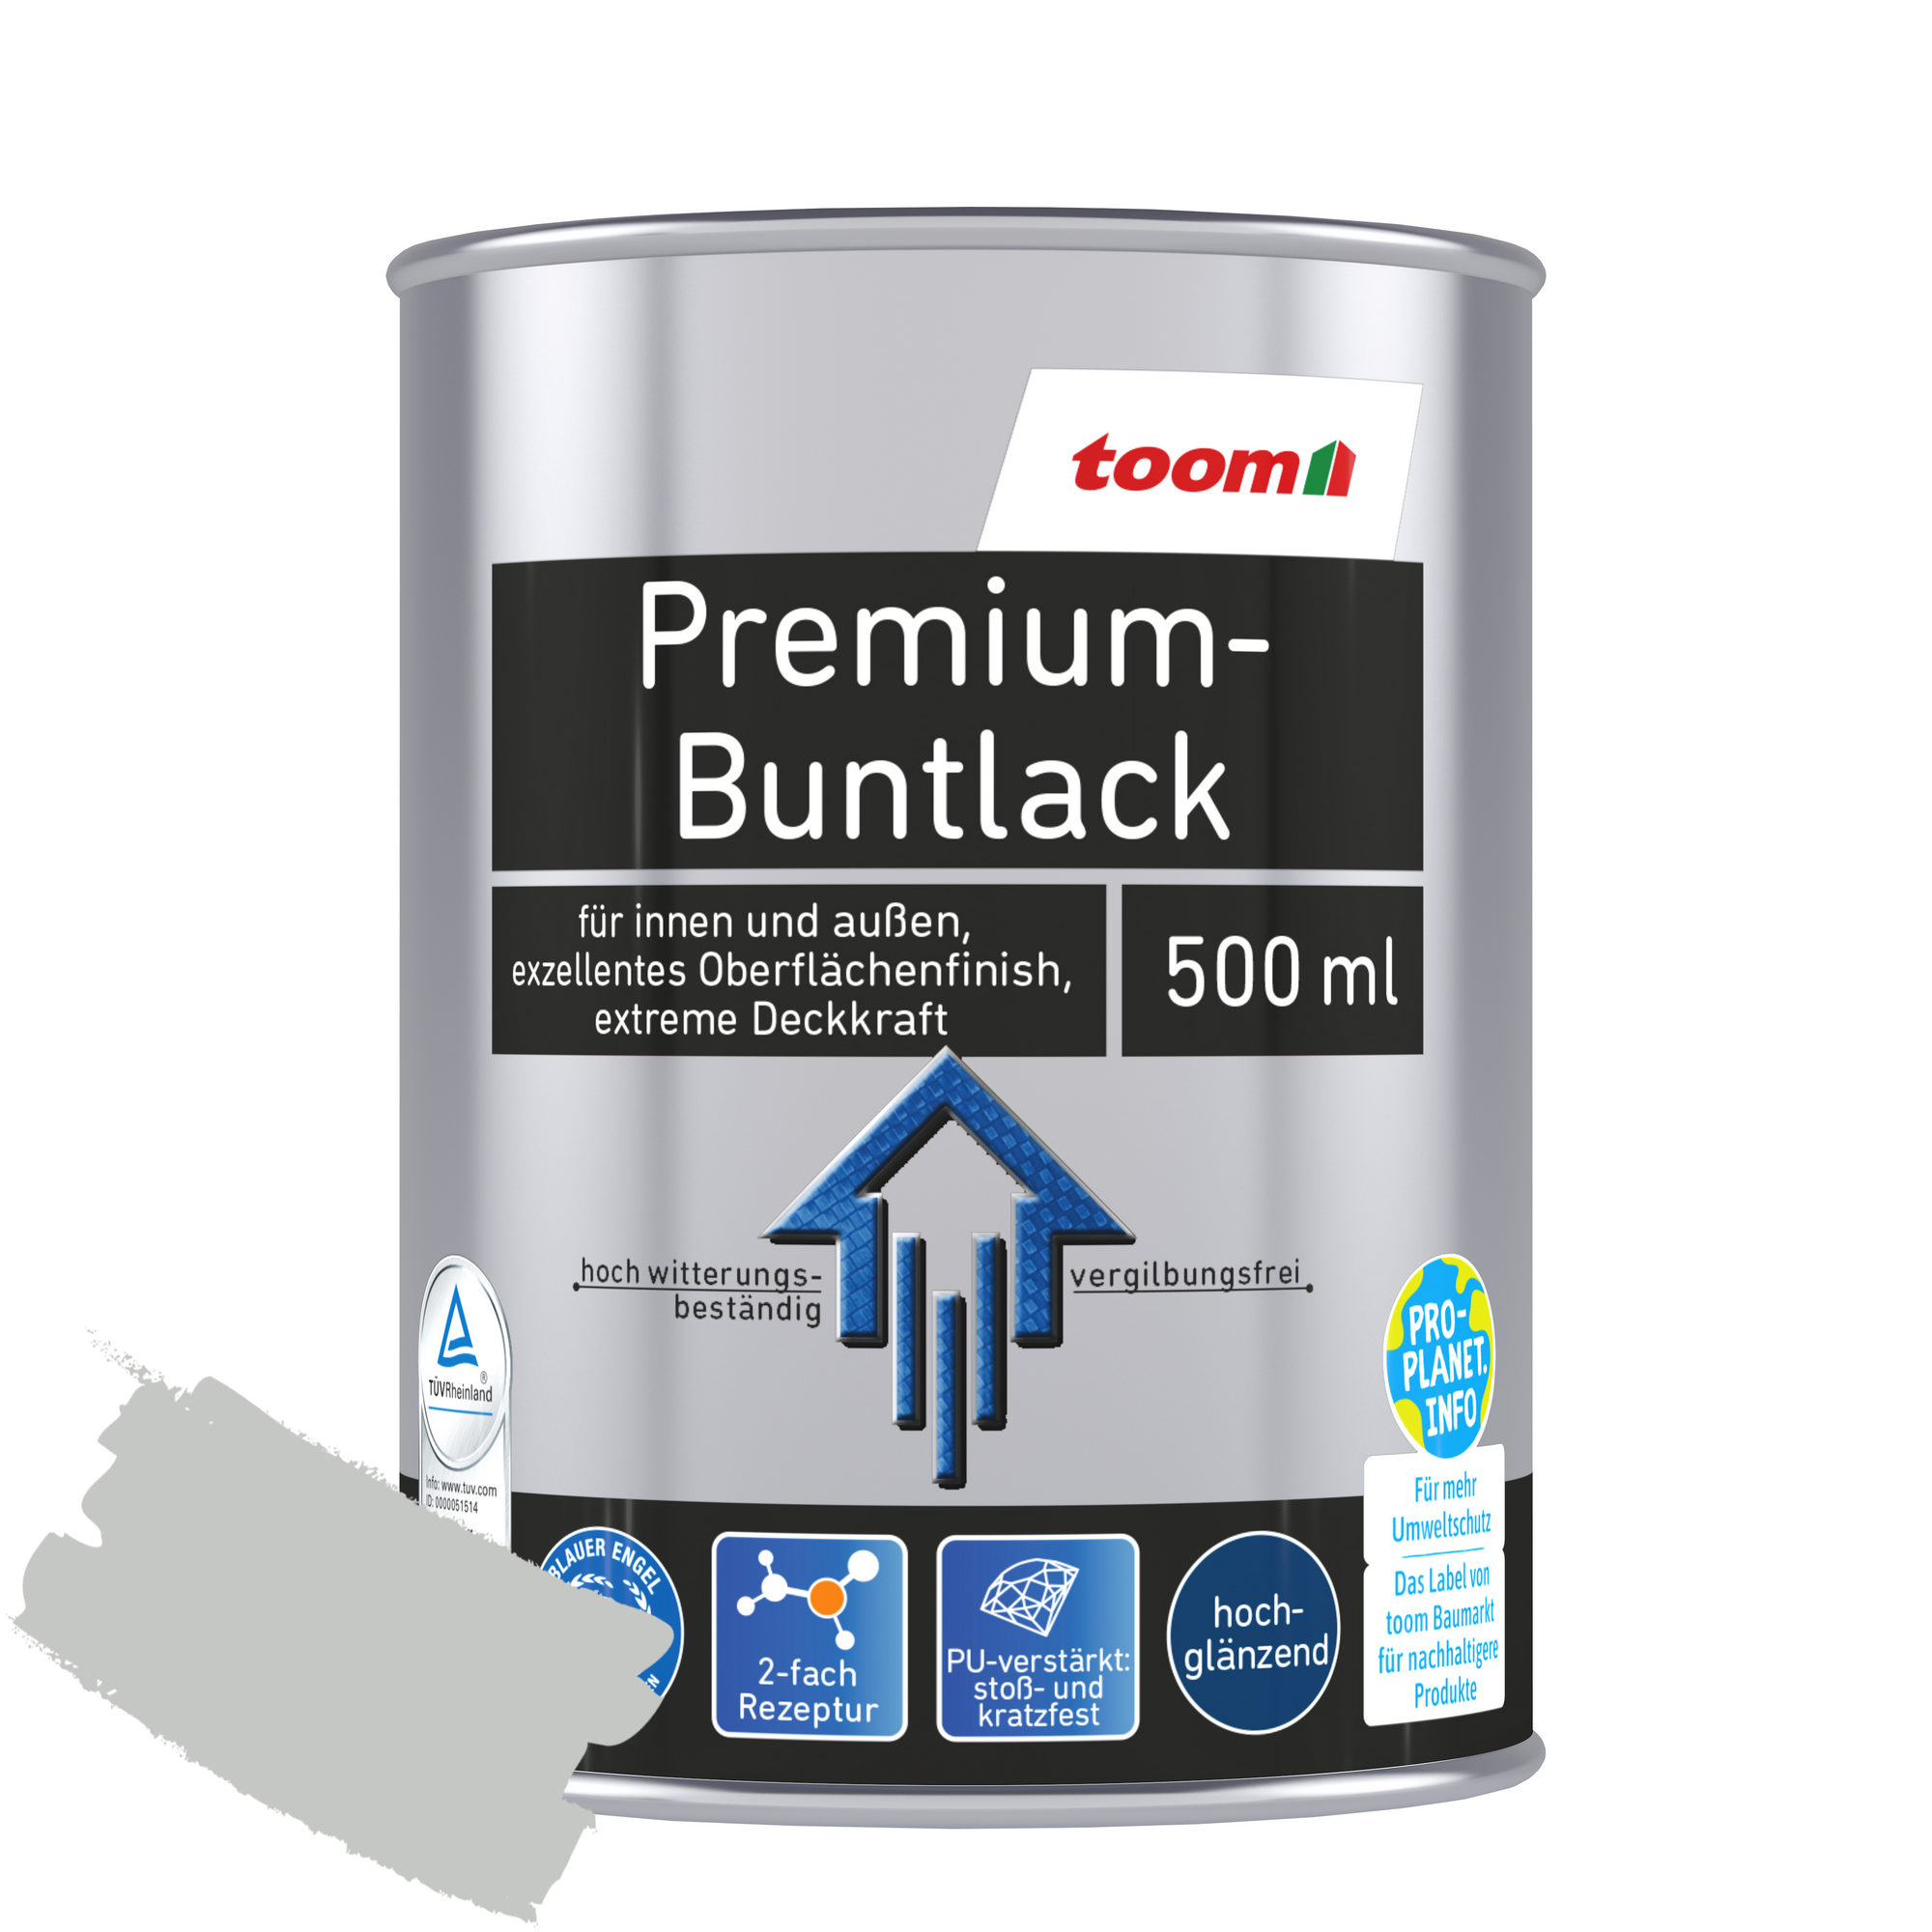 Premium-Buntlack lichtgrau glänzend 500 ml + product picture